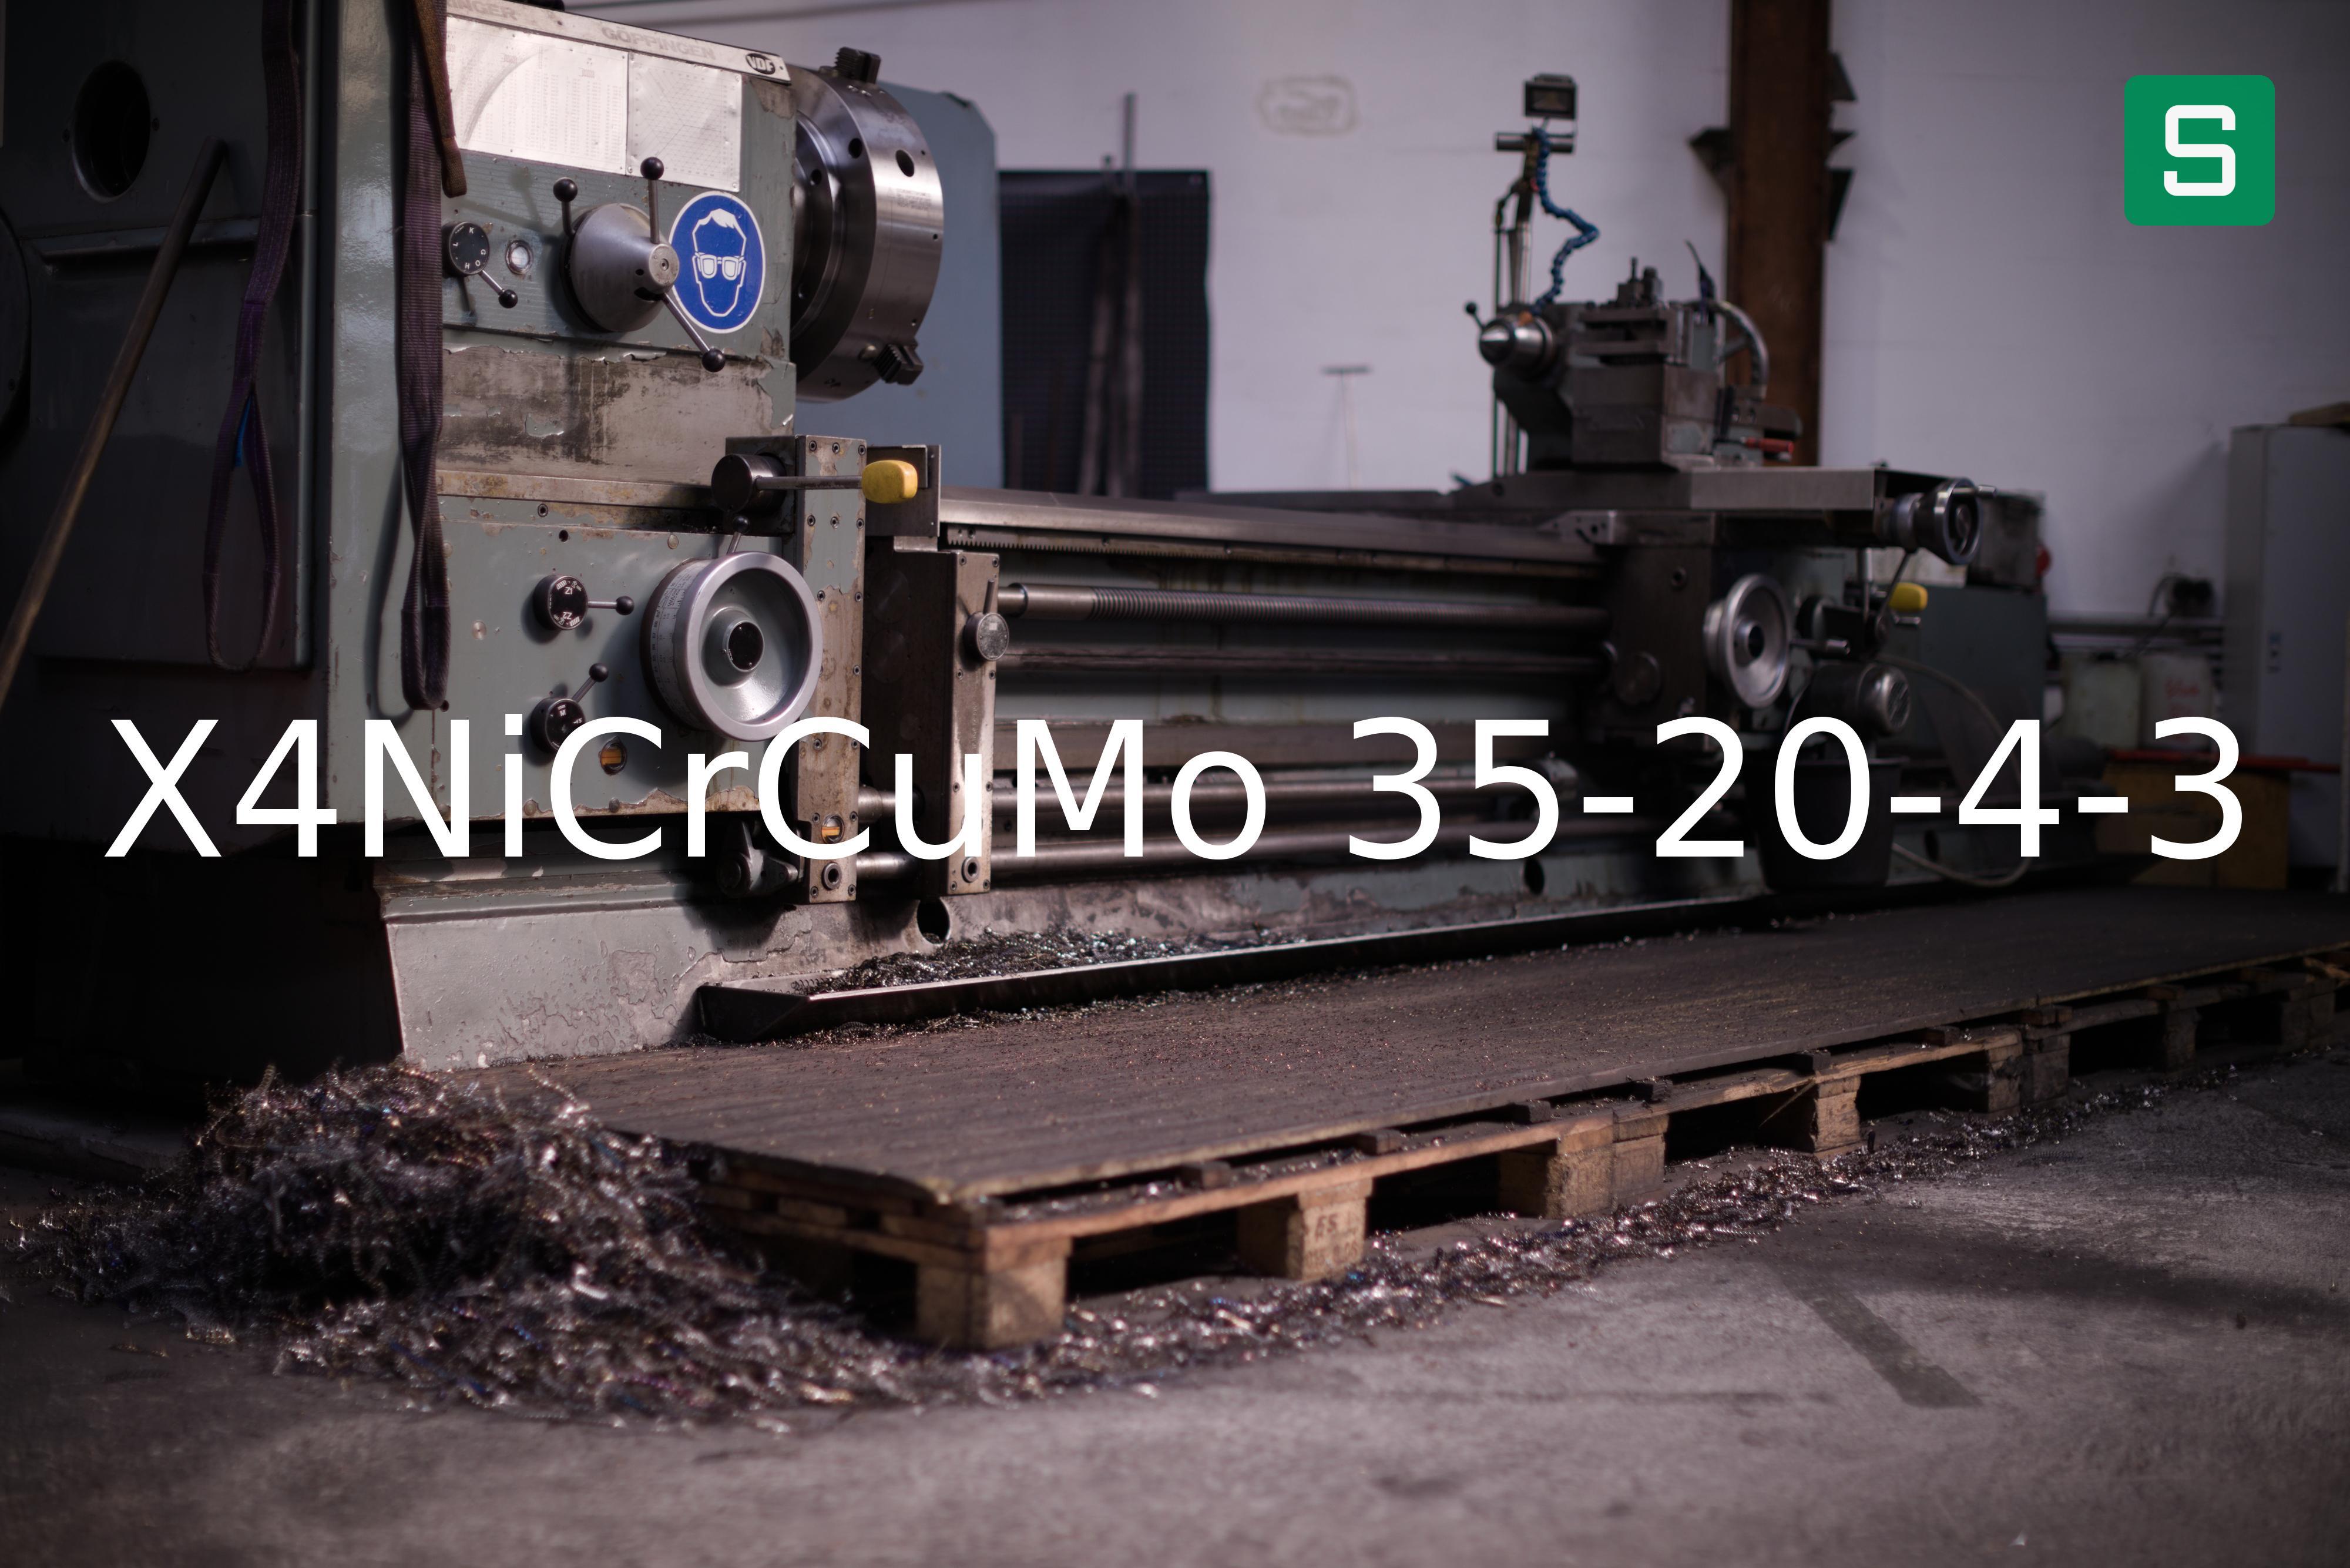 Steel Material: X4NiCrCuMo 35-20-4-3